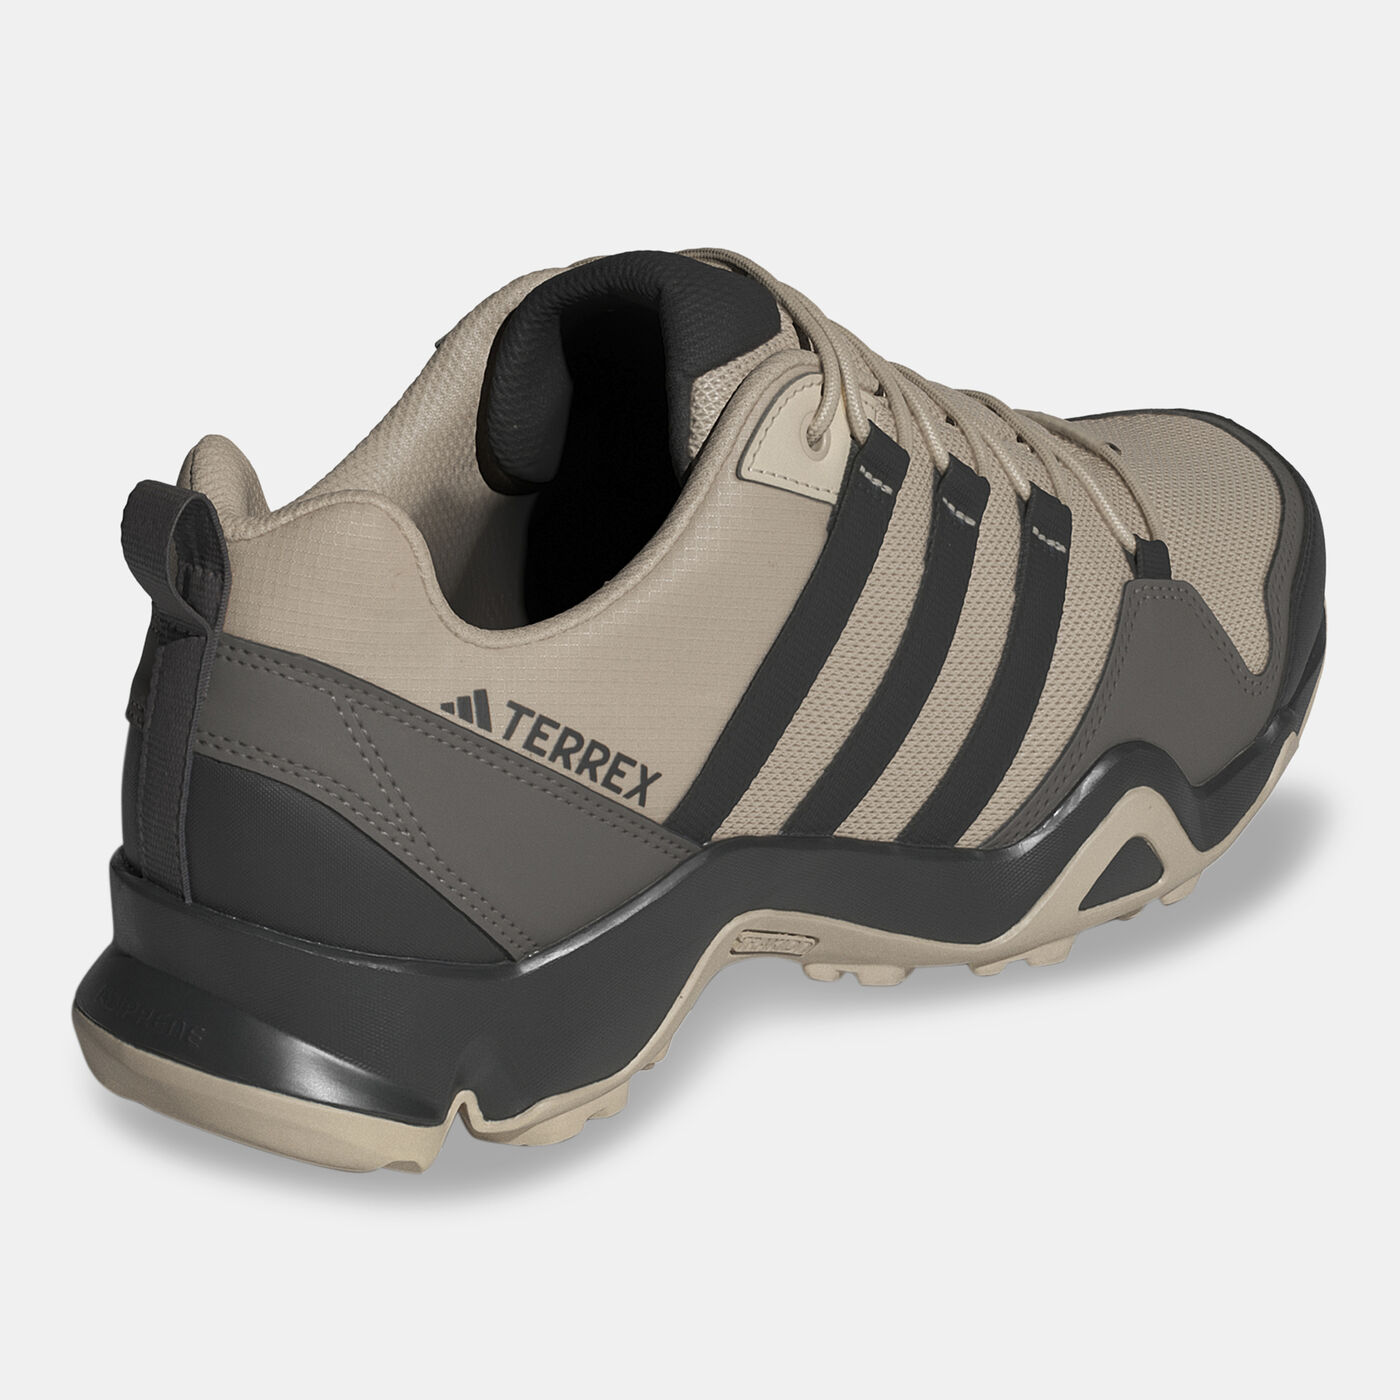 Men's AX2S Hiking Shoes